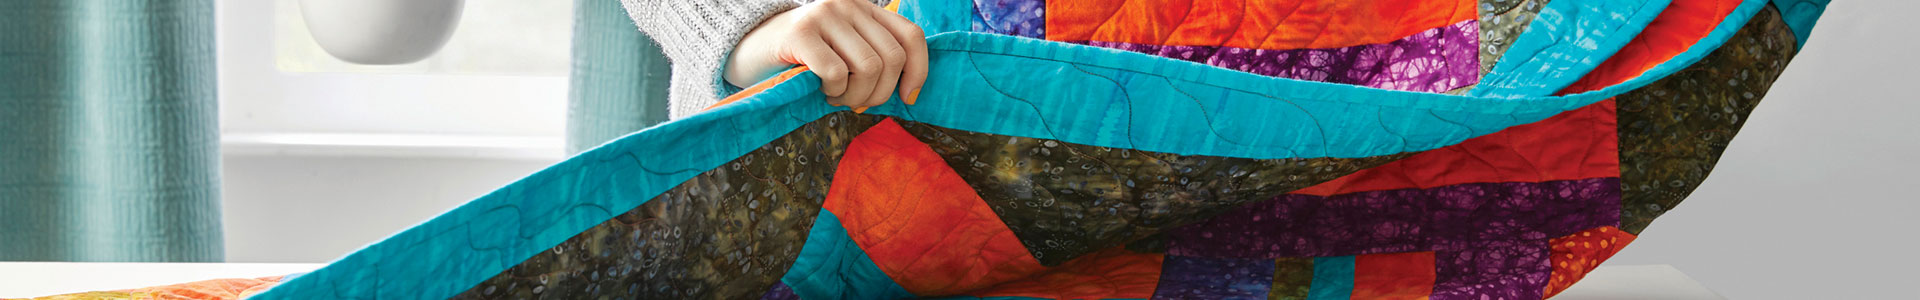 Pre-Cut fabrics at JOANN - fabric bundles, fabric quarters, fabric rolls, fabric shapes